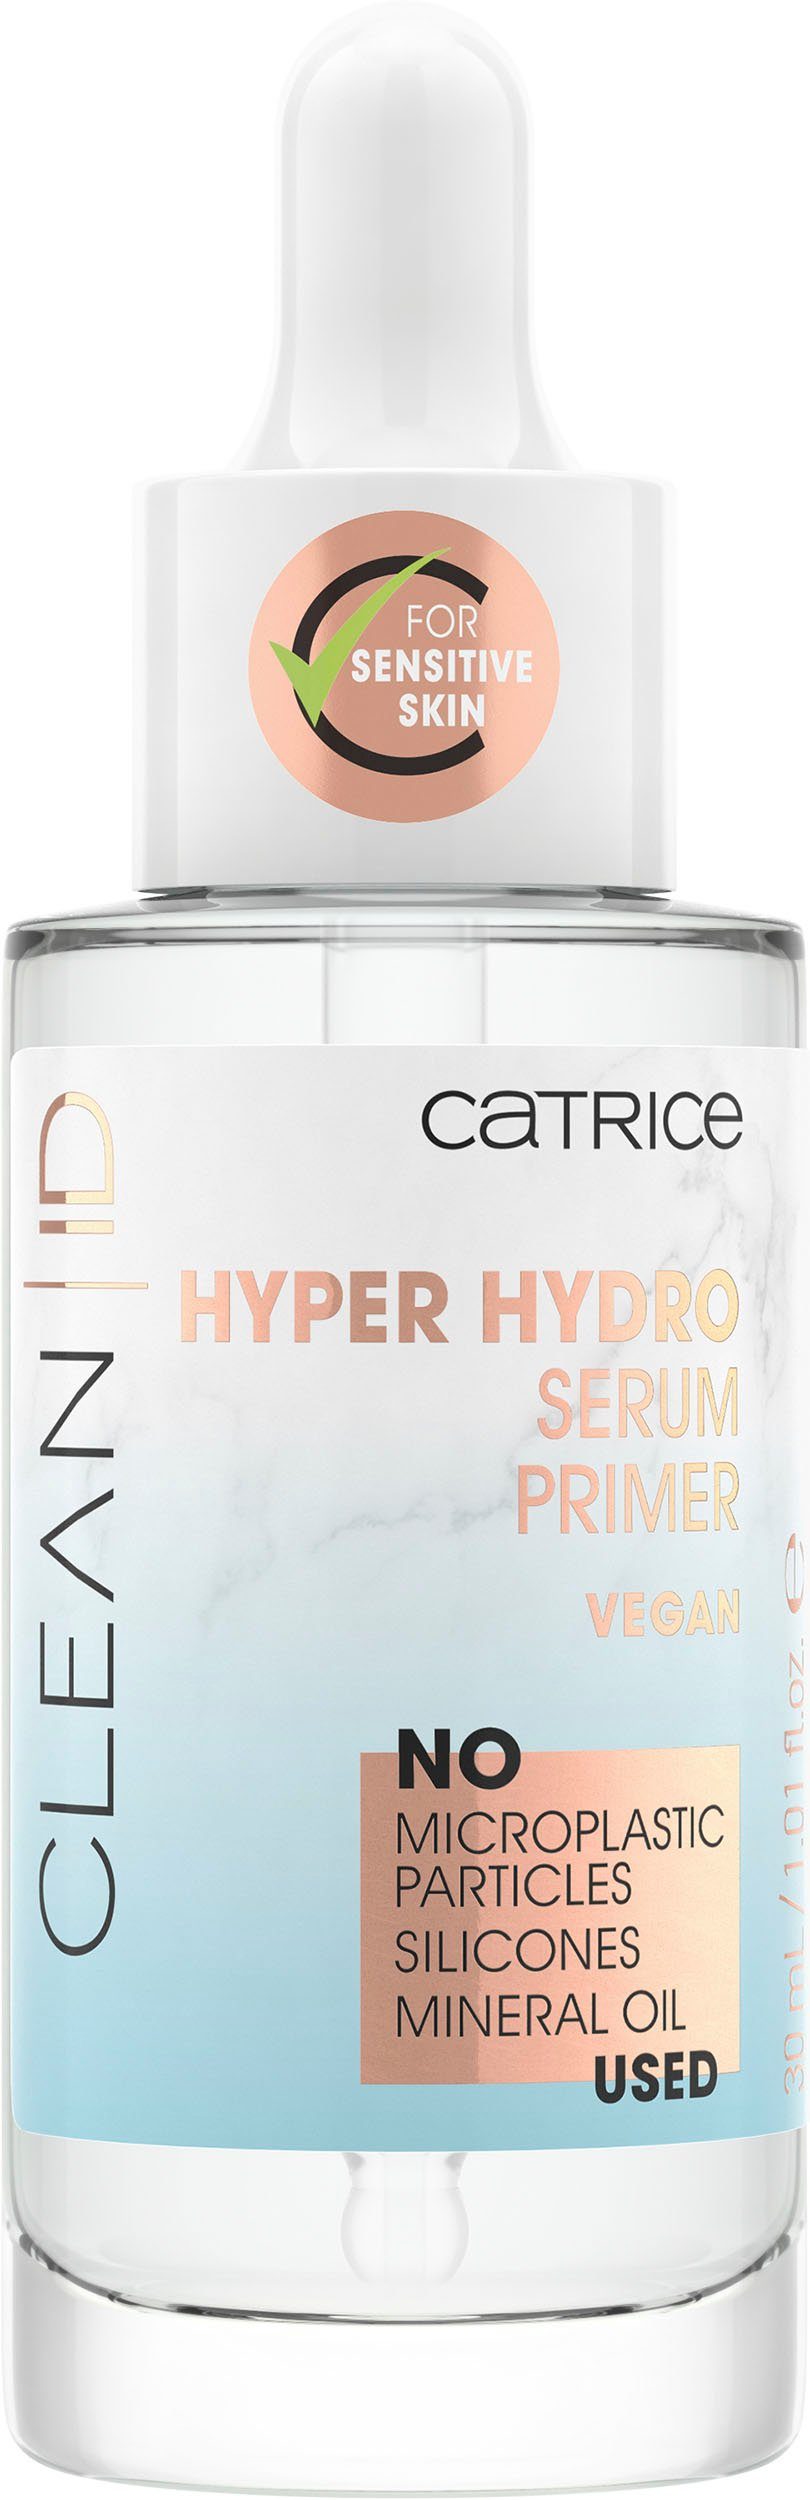 Serum Primer, ID Hyper Clean Hydro Primer Catrice Catrice